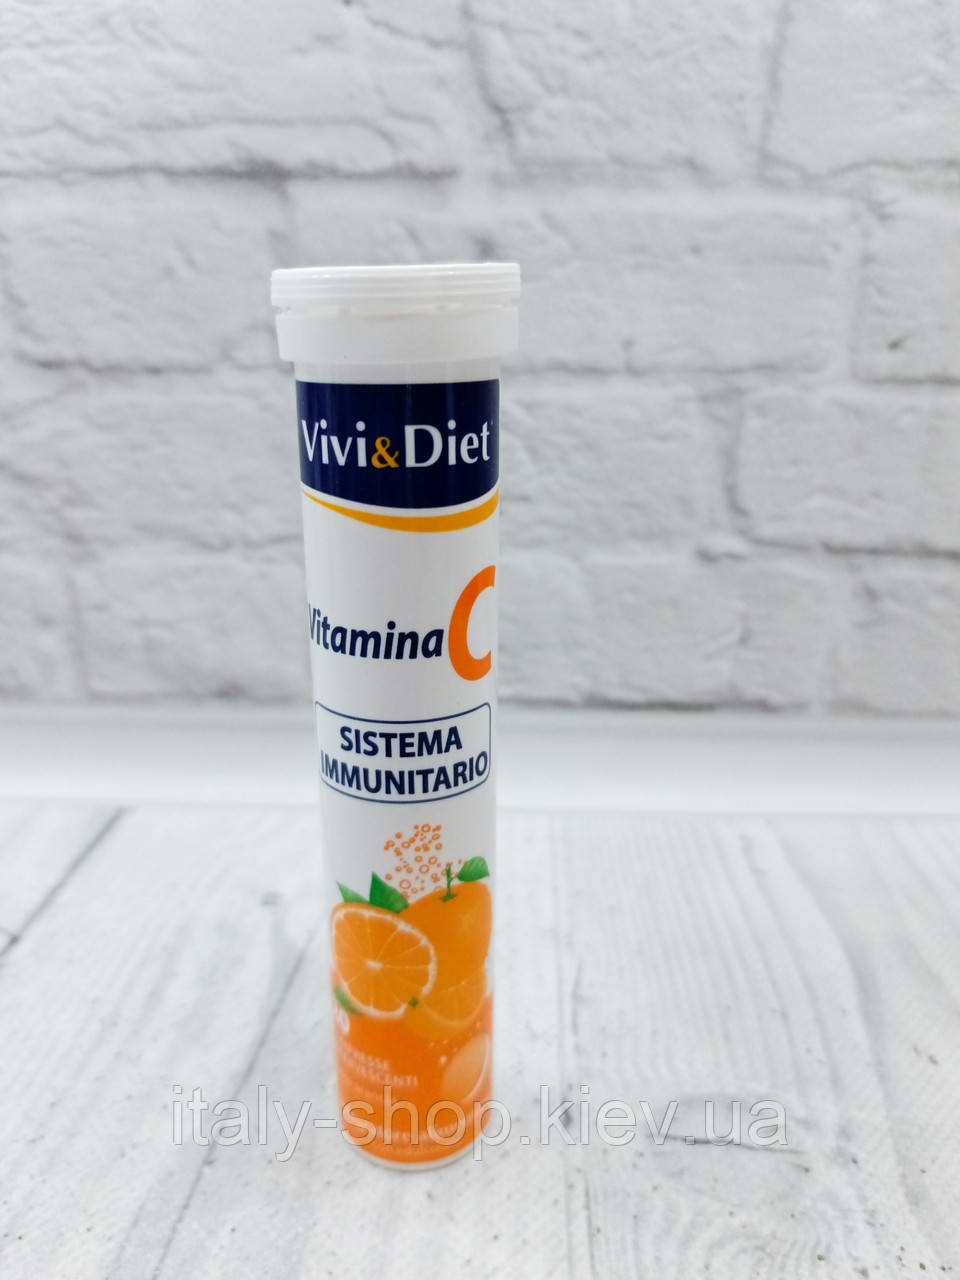 Вітамін С із смаком апельсину Vivi&Diet Sistema Immunitario Vitamina C 20 таблеток Італія